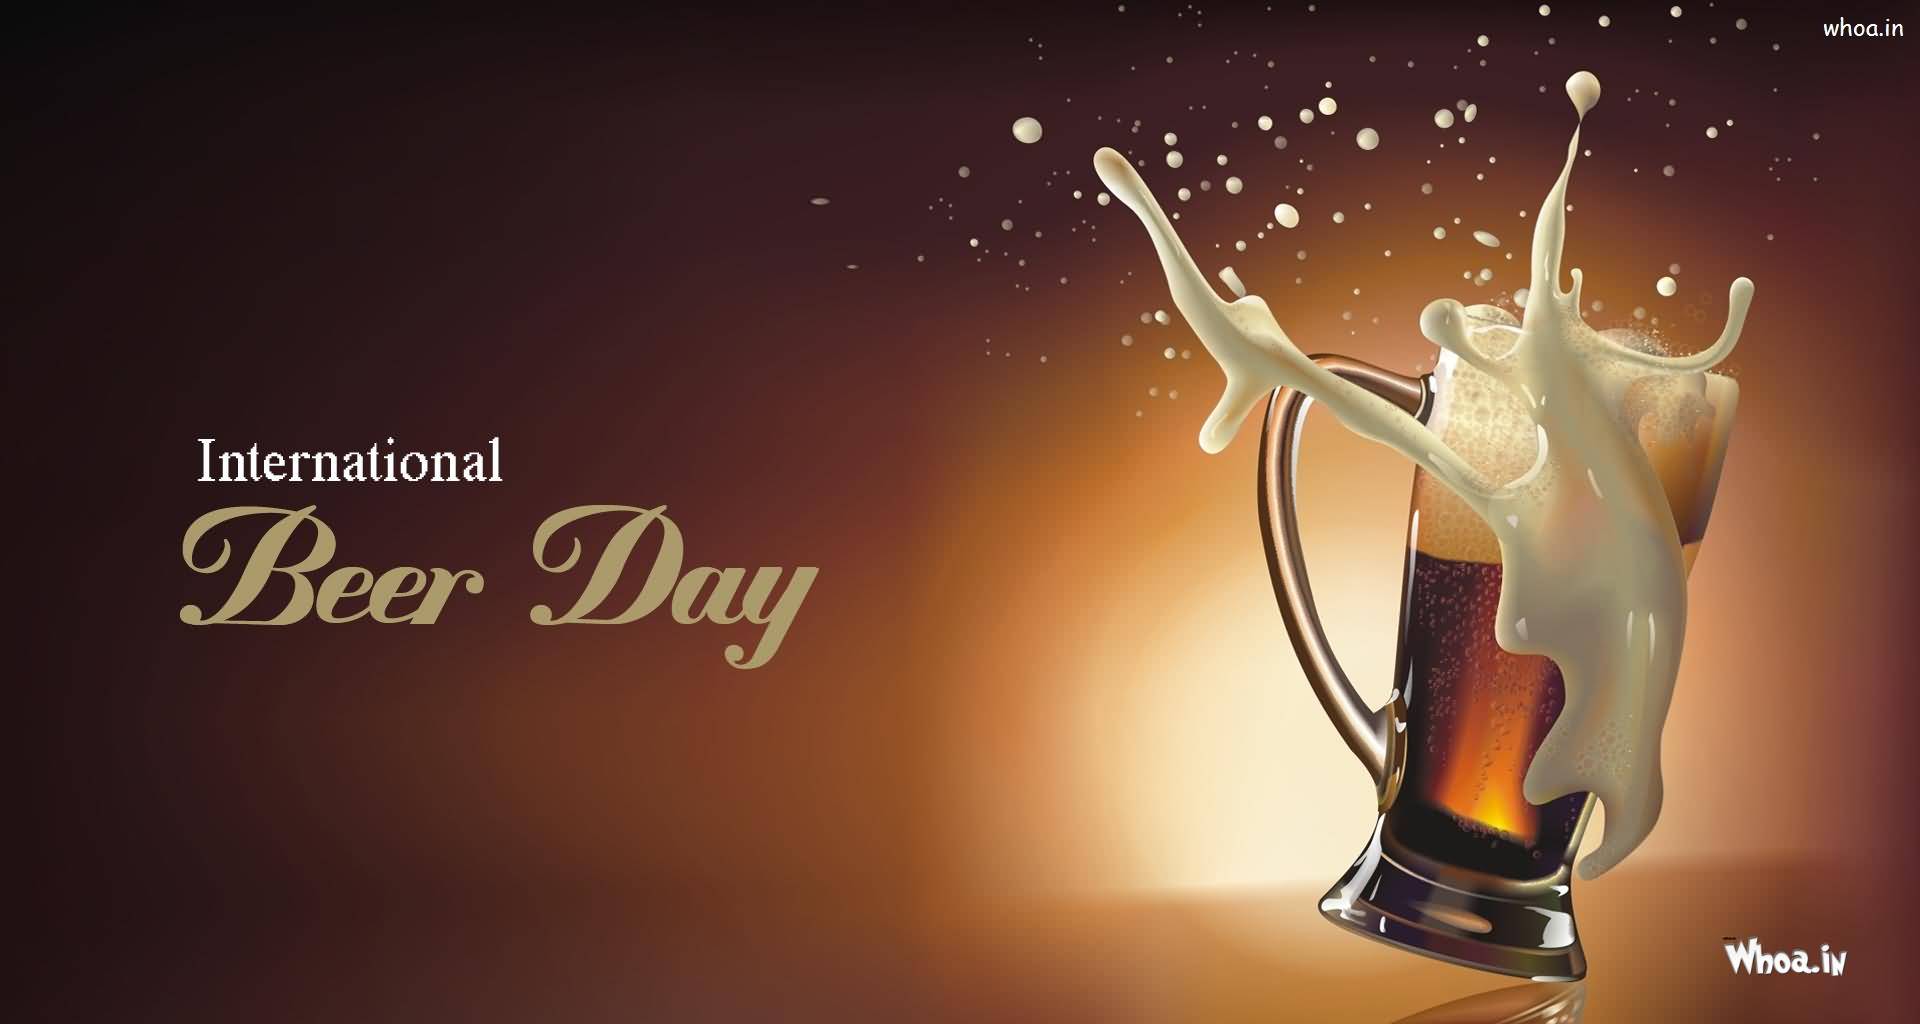 International Beer Day Beer Mug Picture